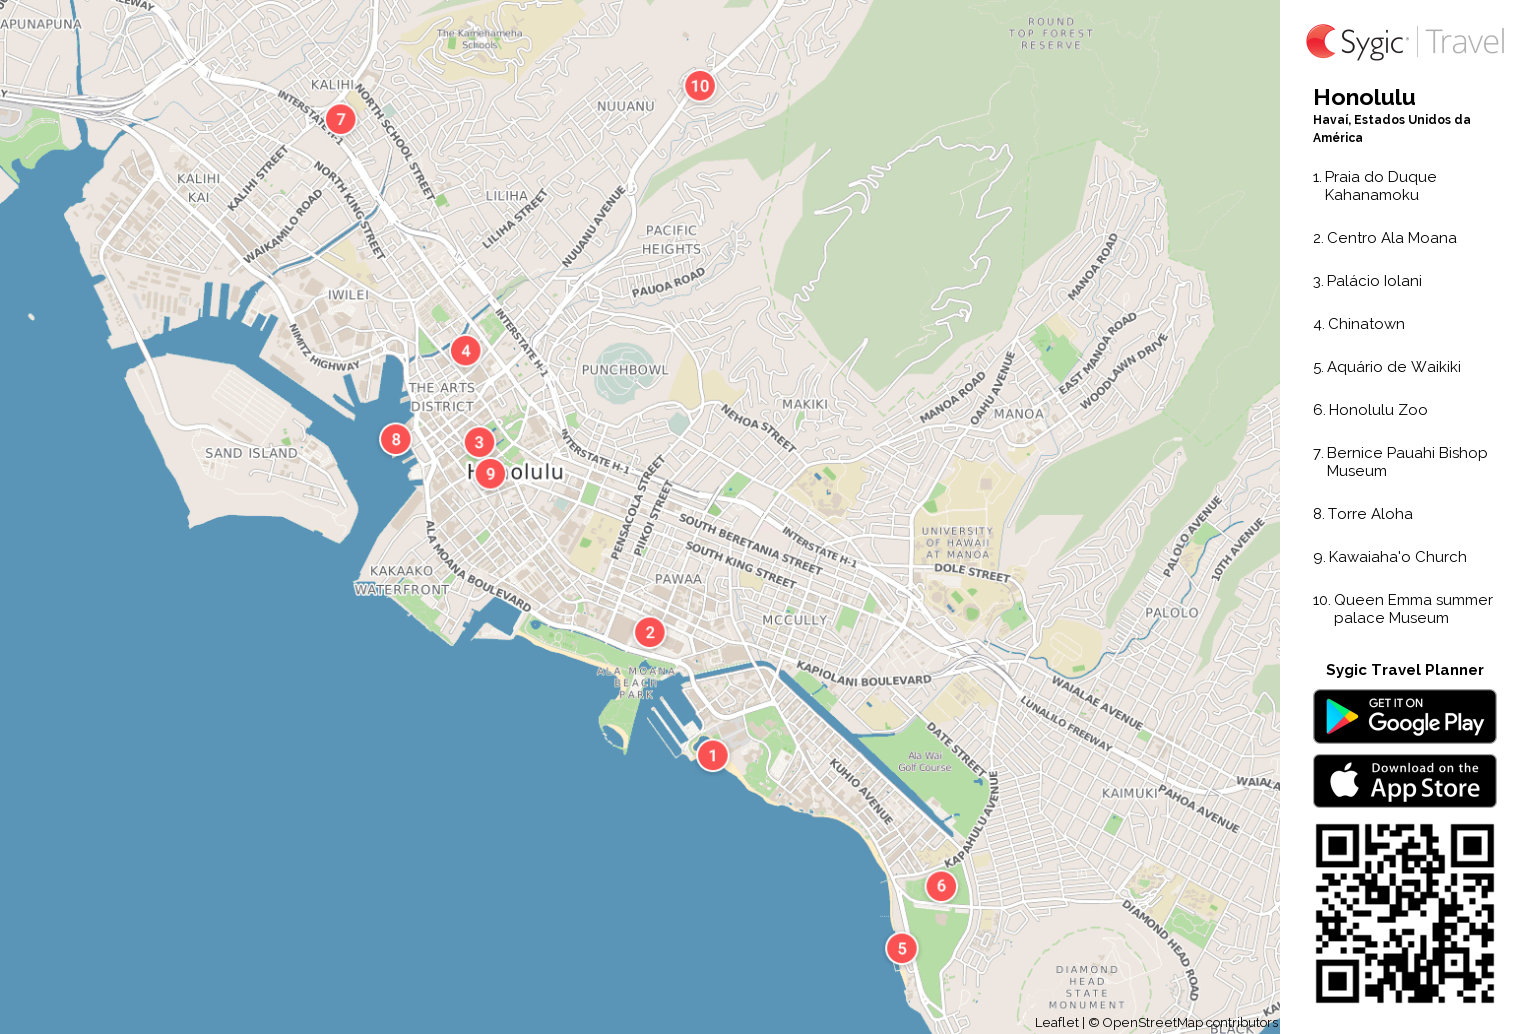 honolulu-mapa-turistico-em-pdf